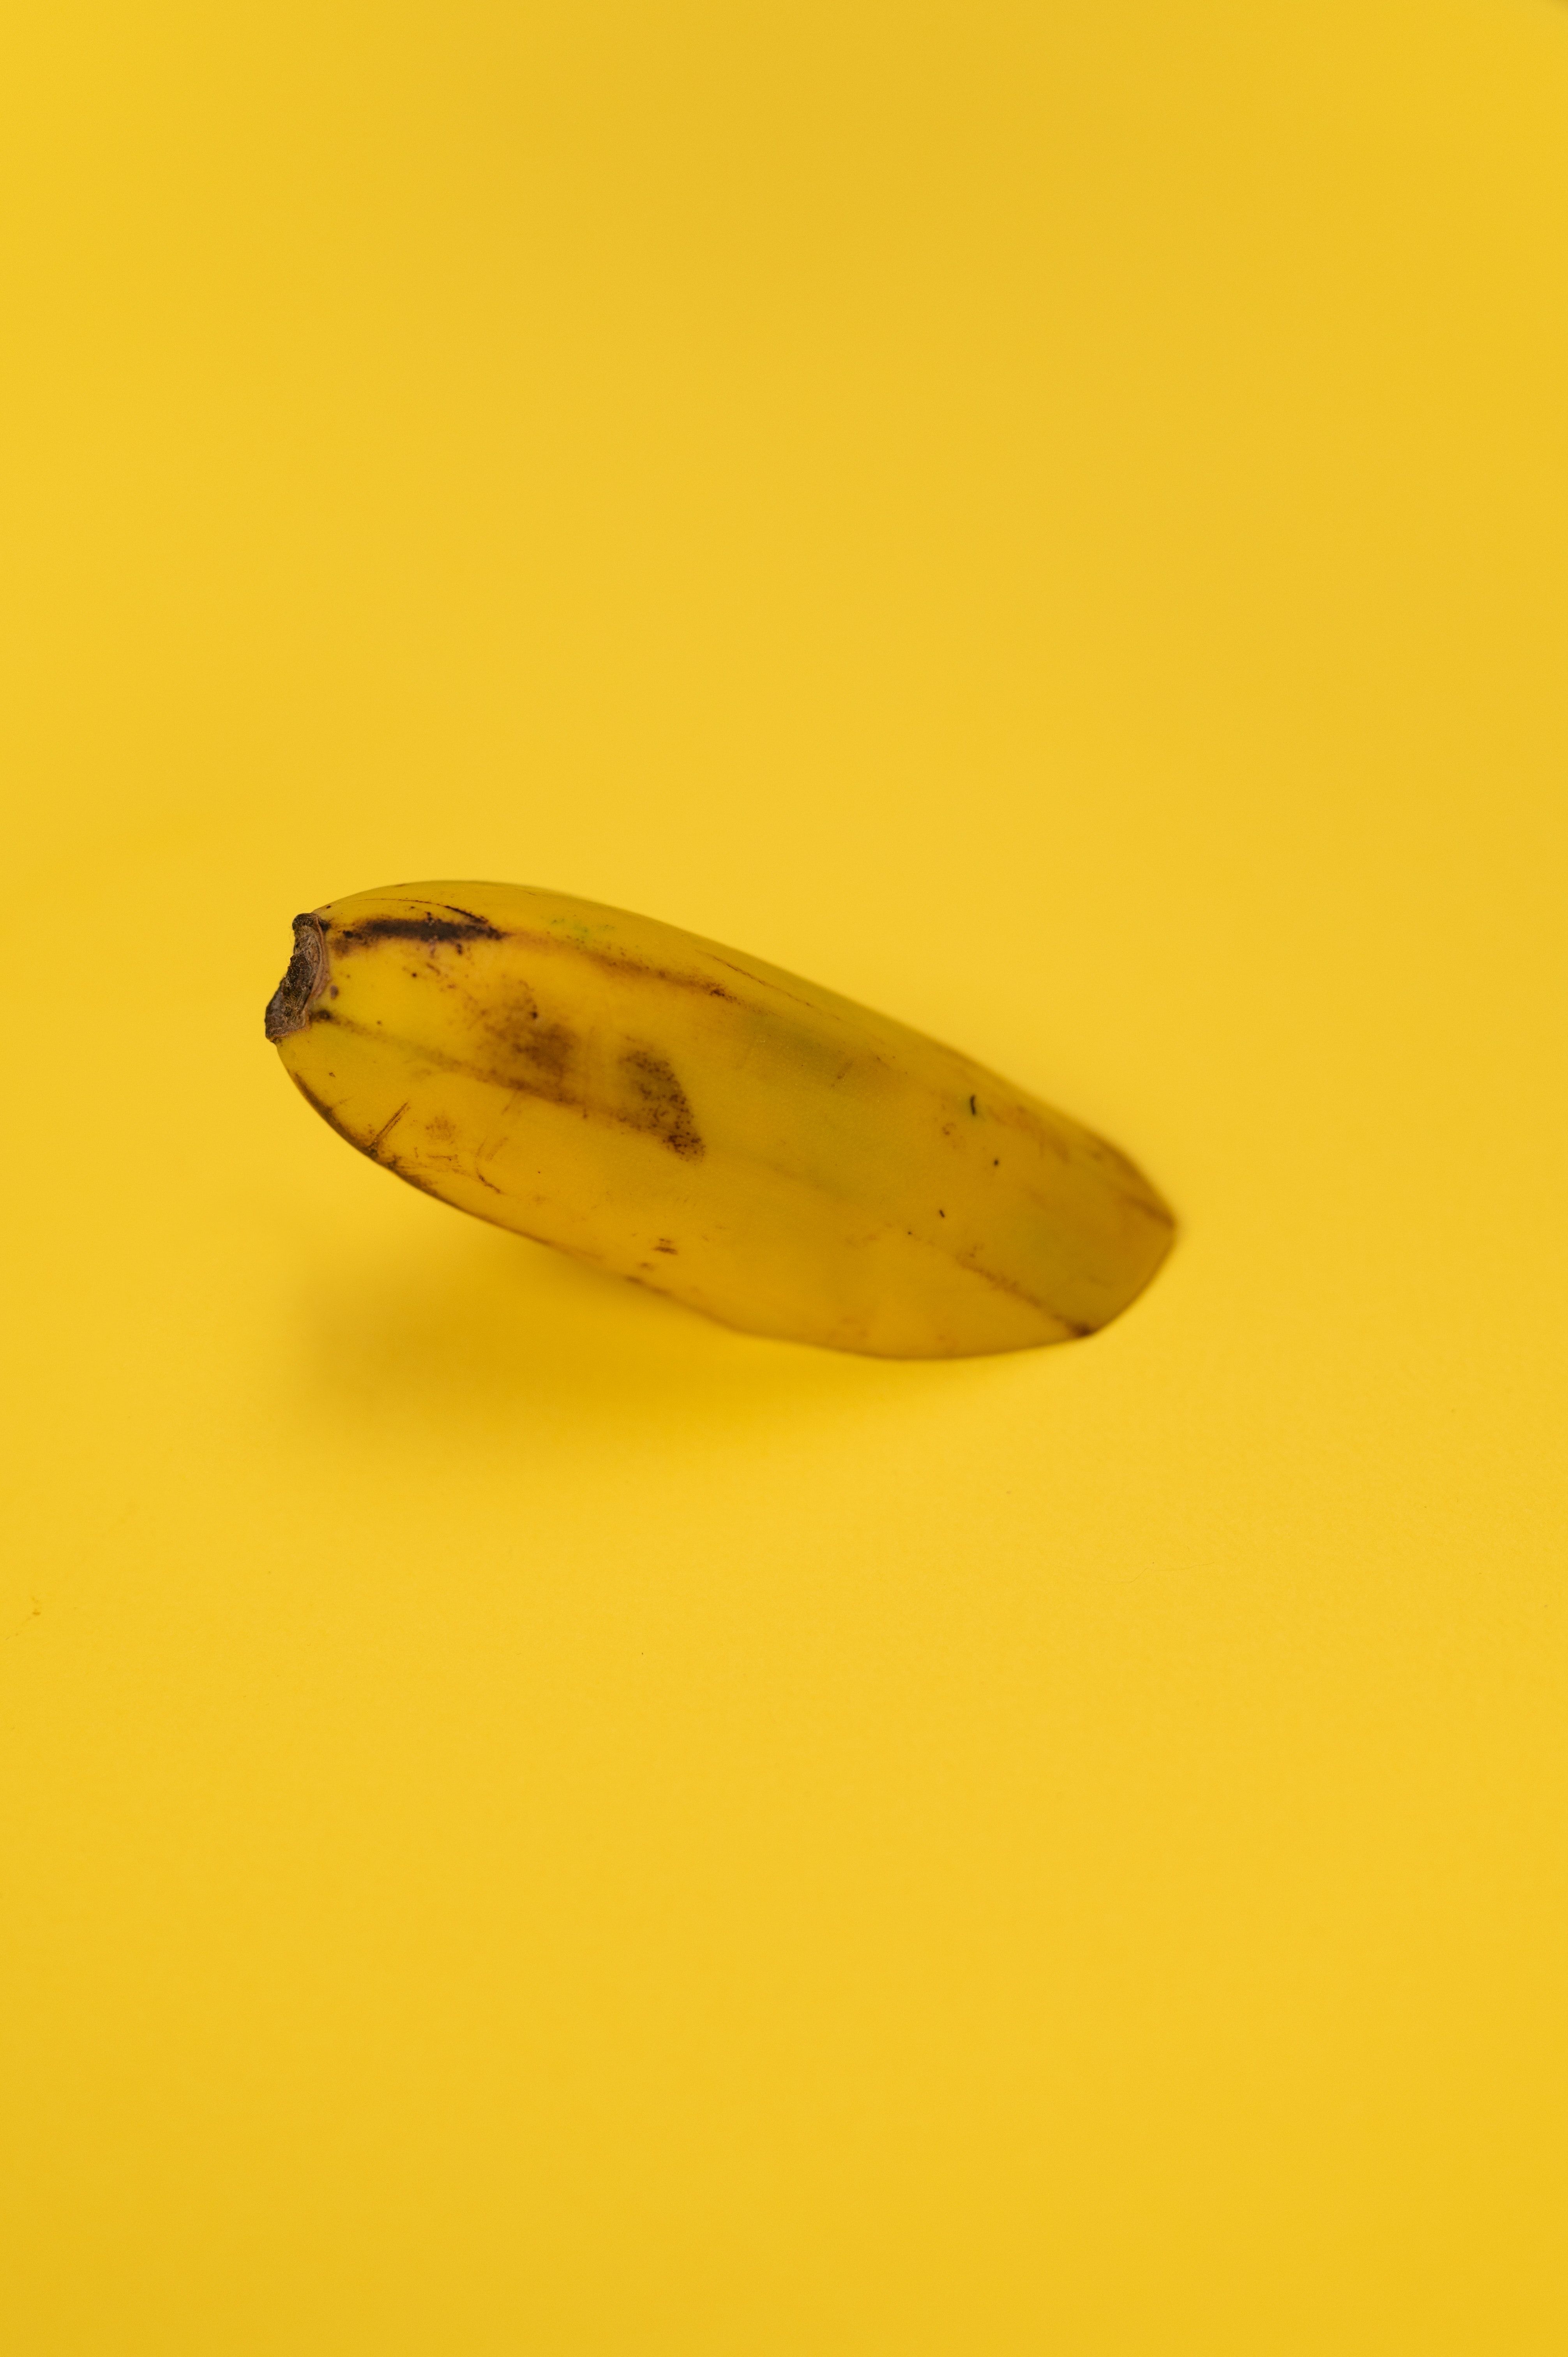 Crop person touching ripe banana peel against partner · Free